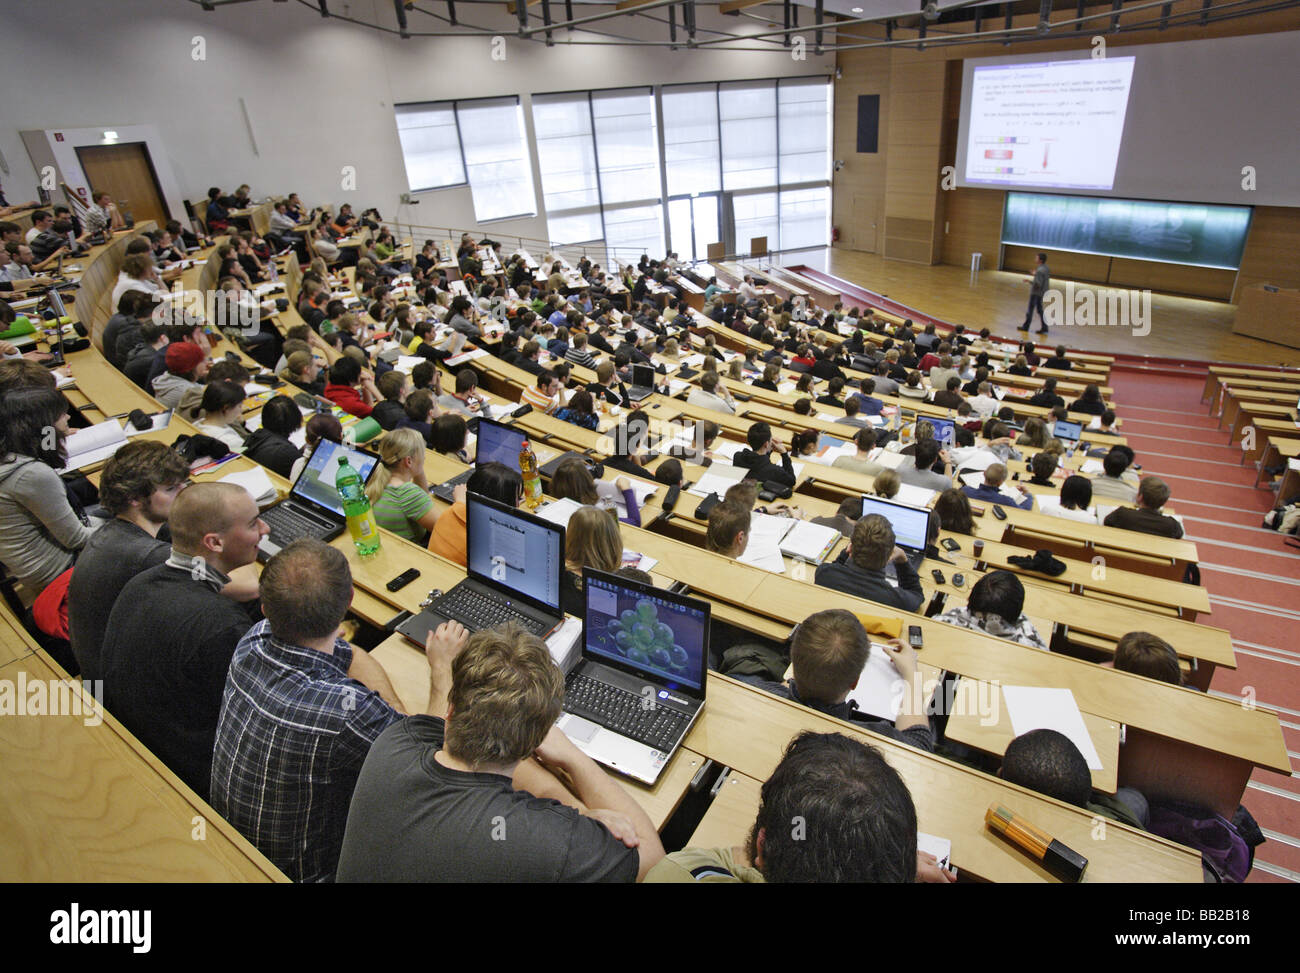 Audimax mit Studenten an der Technischen Universitaet en Ilmenau Deutschland Estudiantes en aula en la Universidad Técnica de Foto de stock